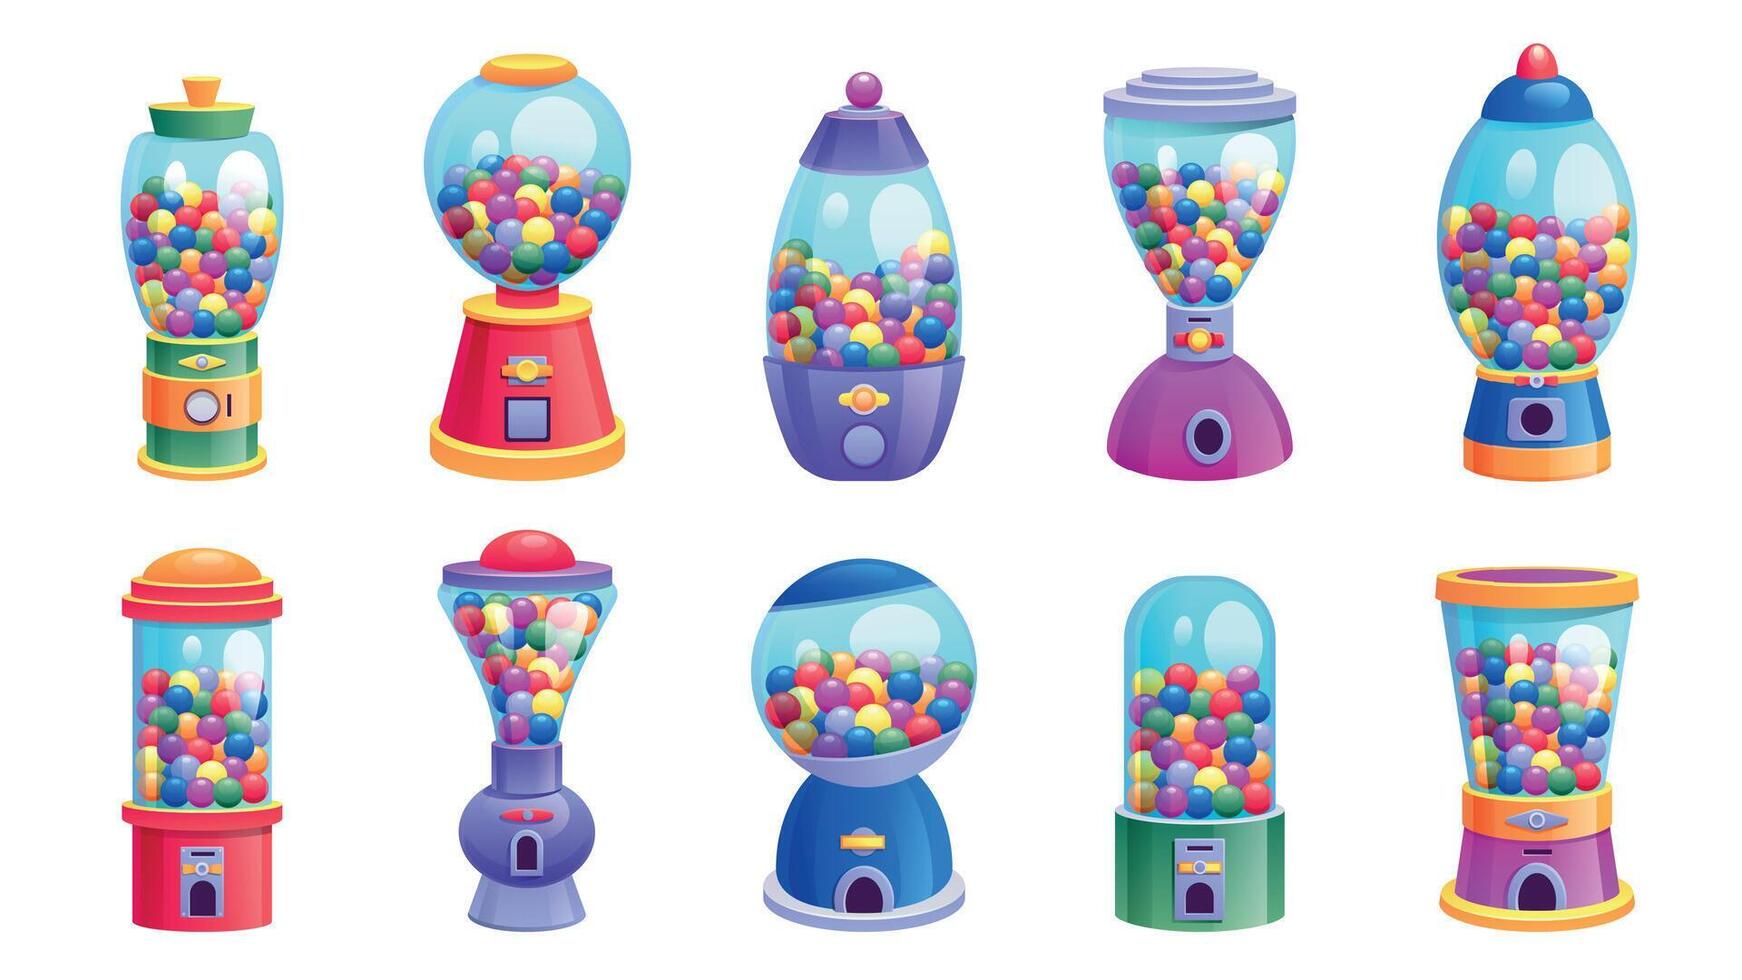 Süßigkeiten Verkauf Maschine. Karikatur Ball Gummi mit bunt Süßigkeiten, retro Verkauf Maschine mit Blase Kaugummi Kapseln. Vektor isoliert einstellen